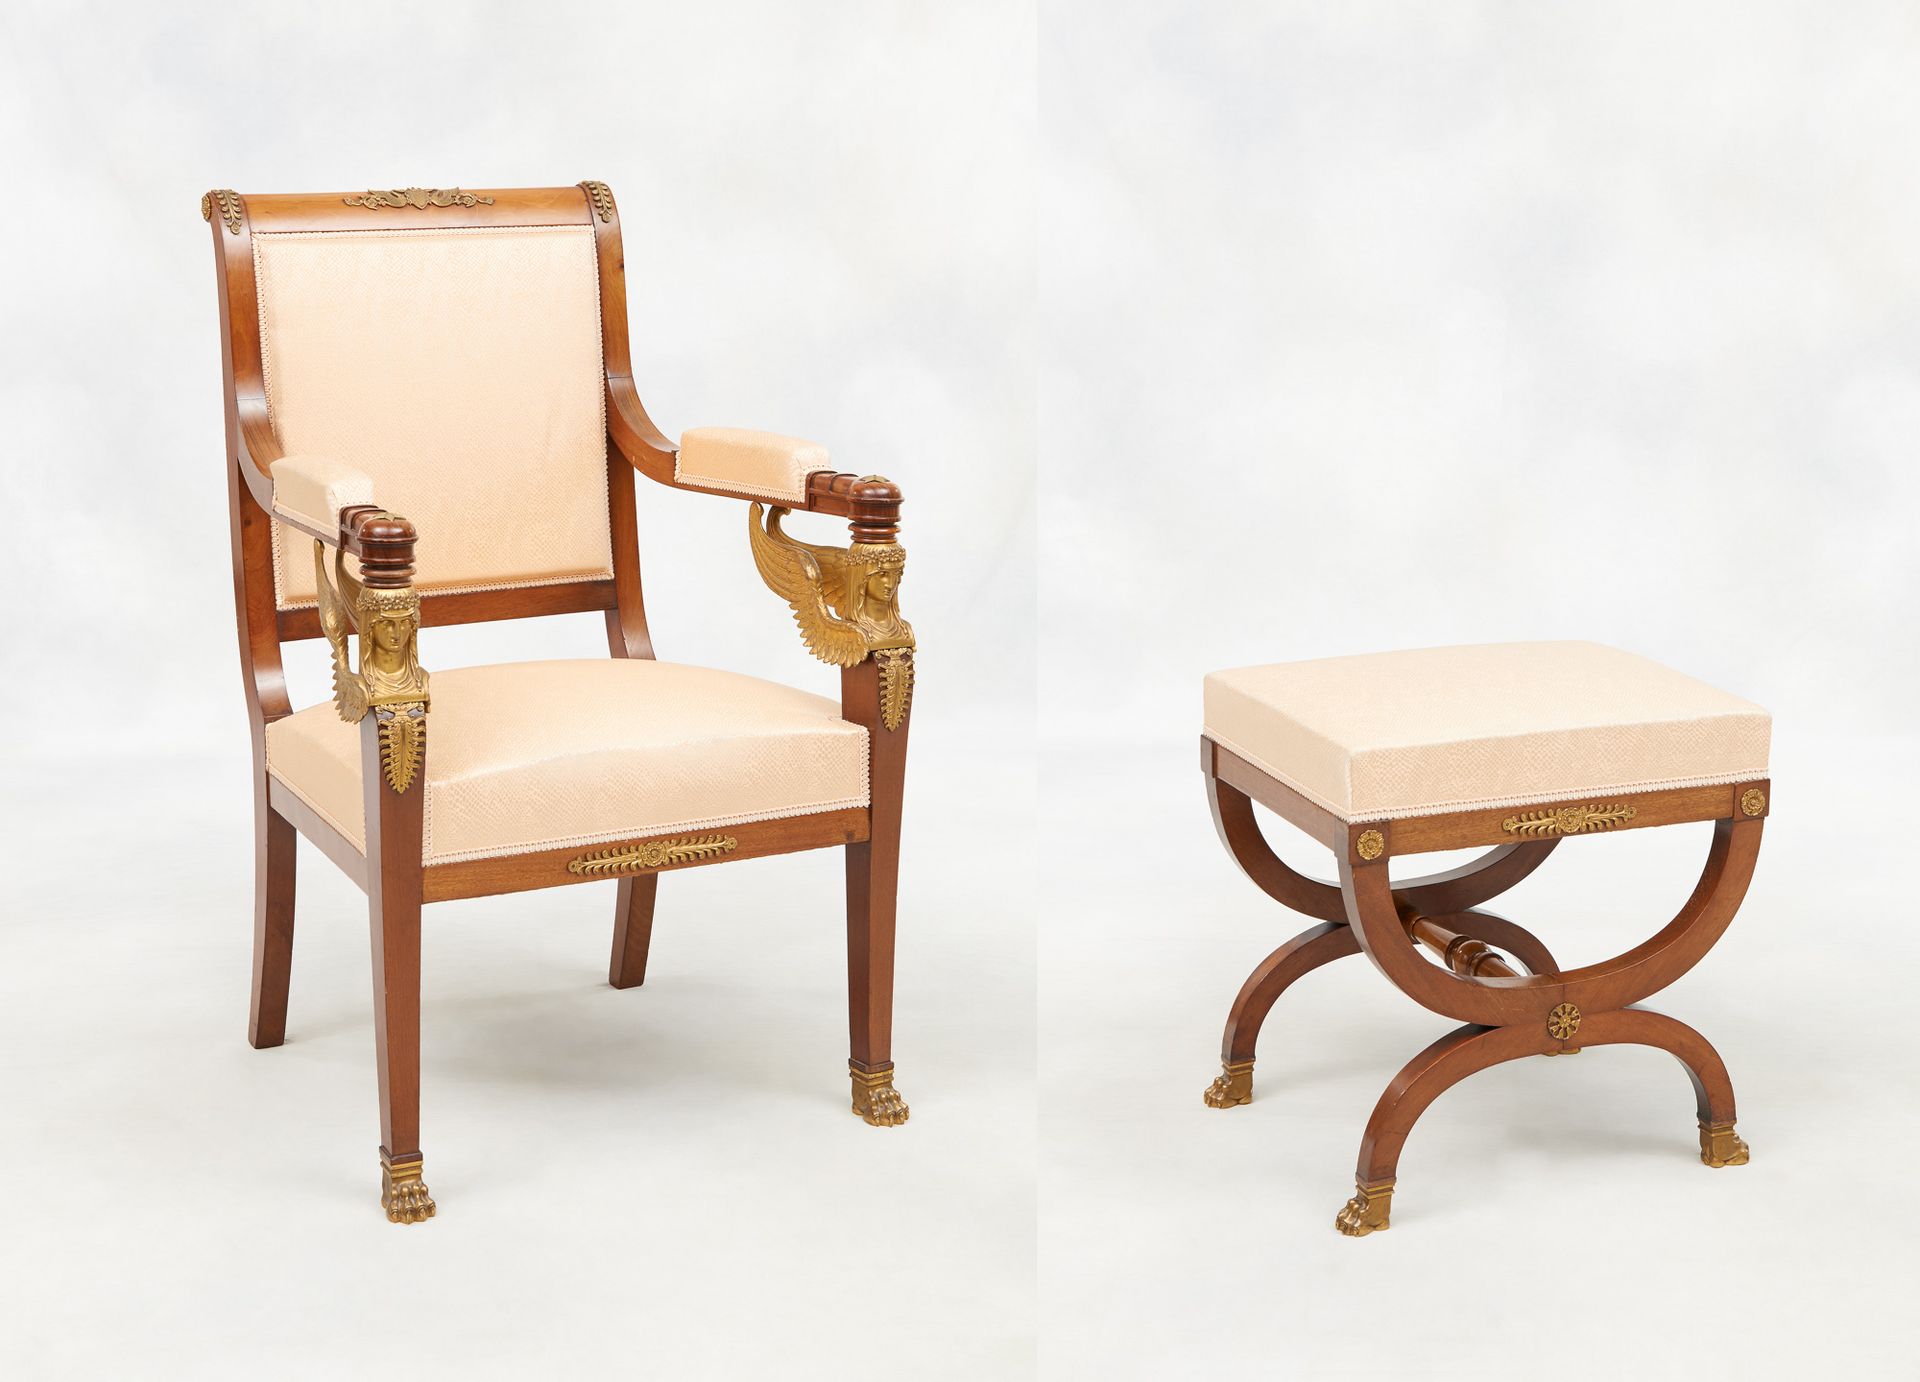 De style Empire. 家具：拍品包括一对扶手椅，扶手上装饰有鎏金铜翼的卡利亚特，一对桃花心木脚踏板，上面覆盖有织物，鎏金铜饰亮点，脚末端为爪子。